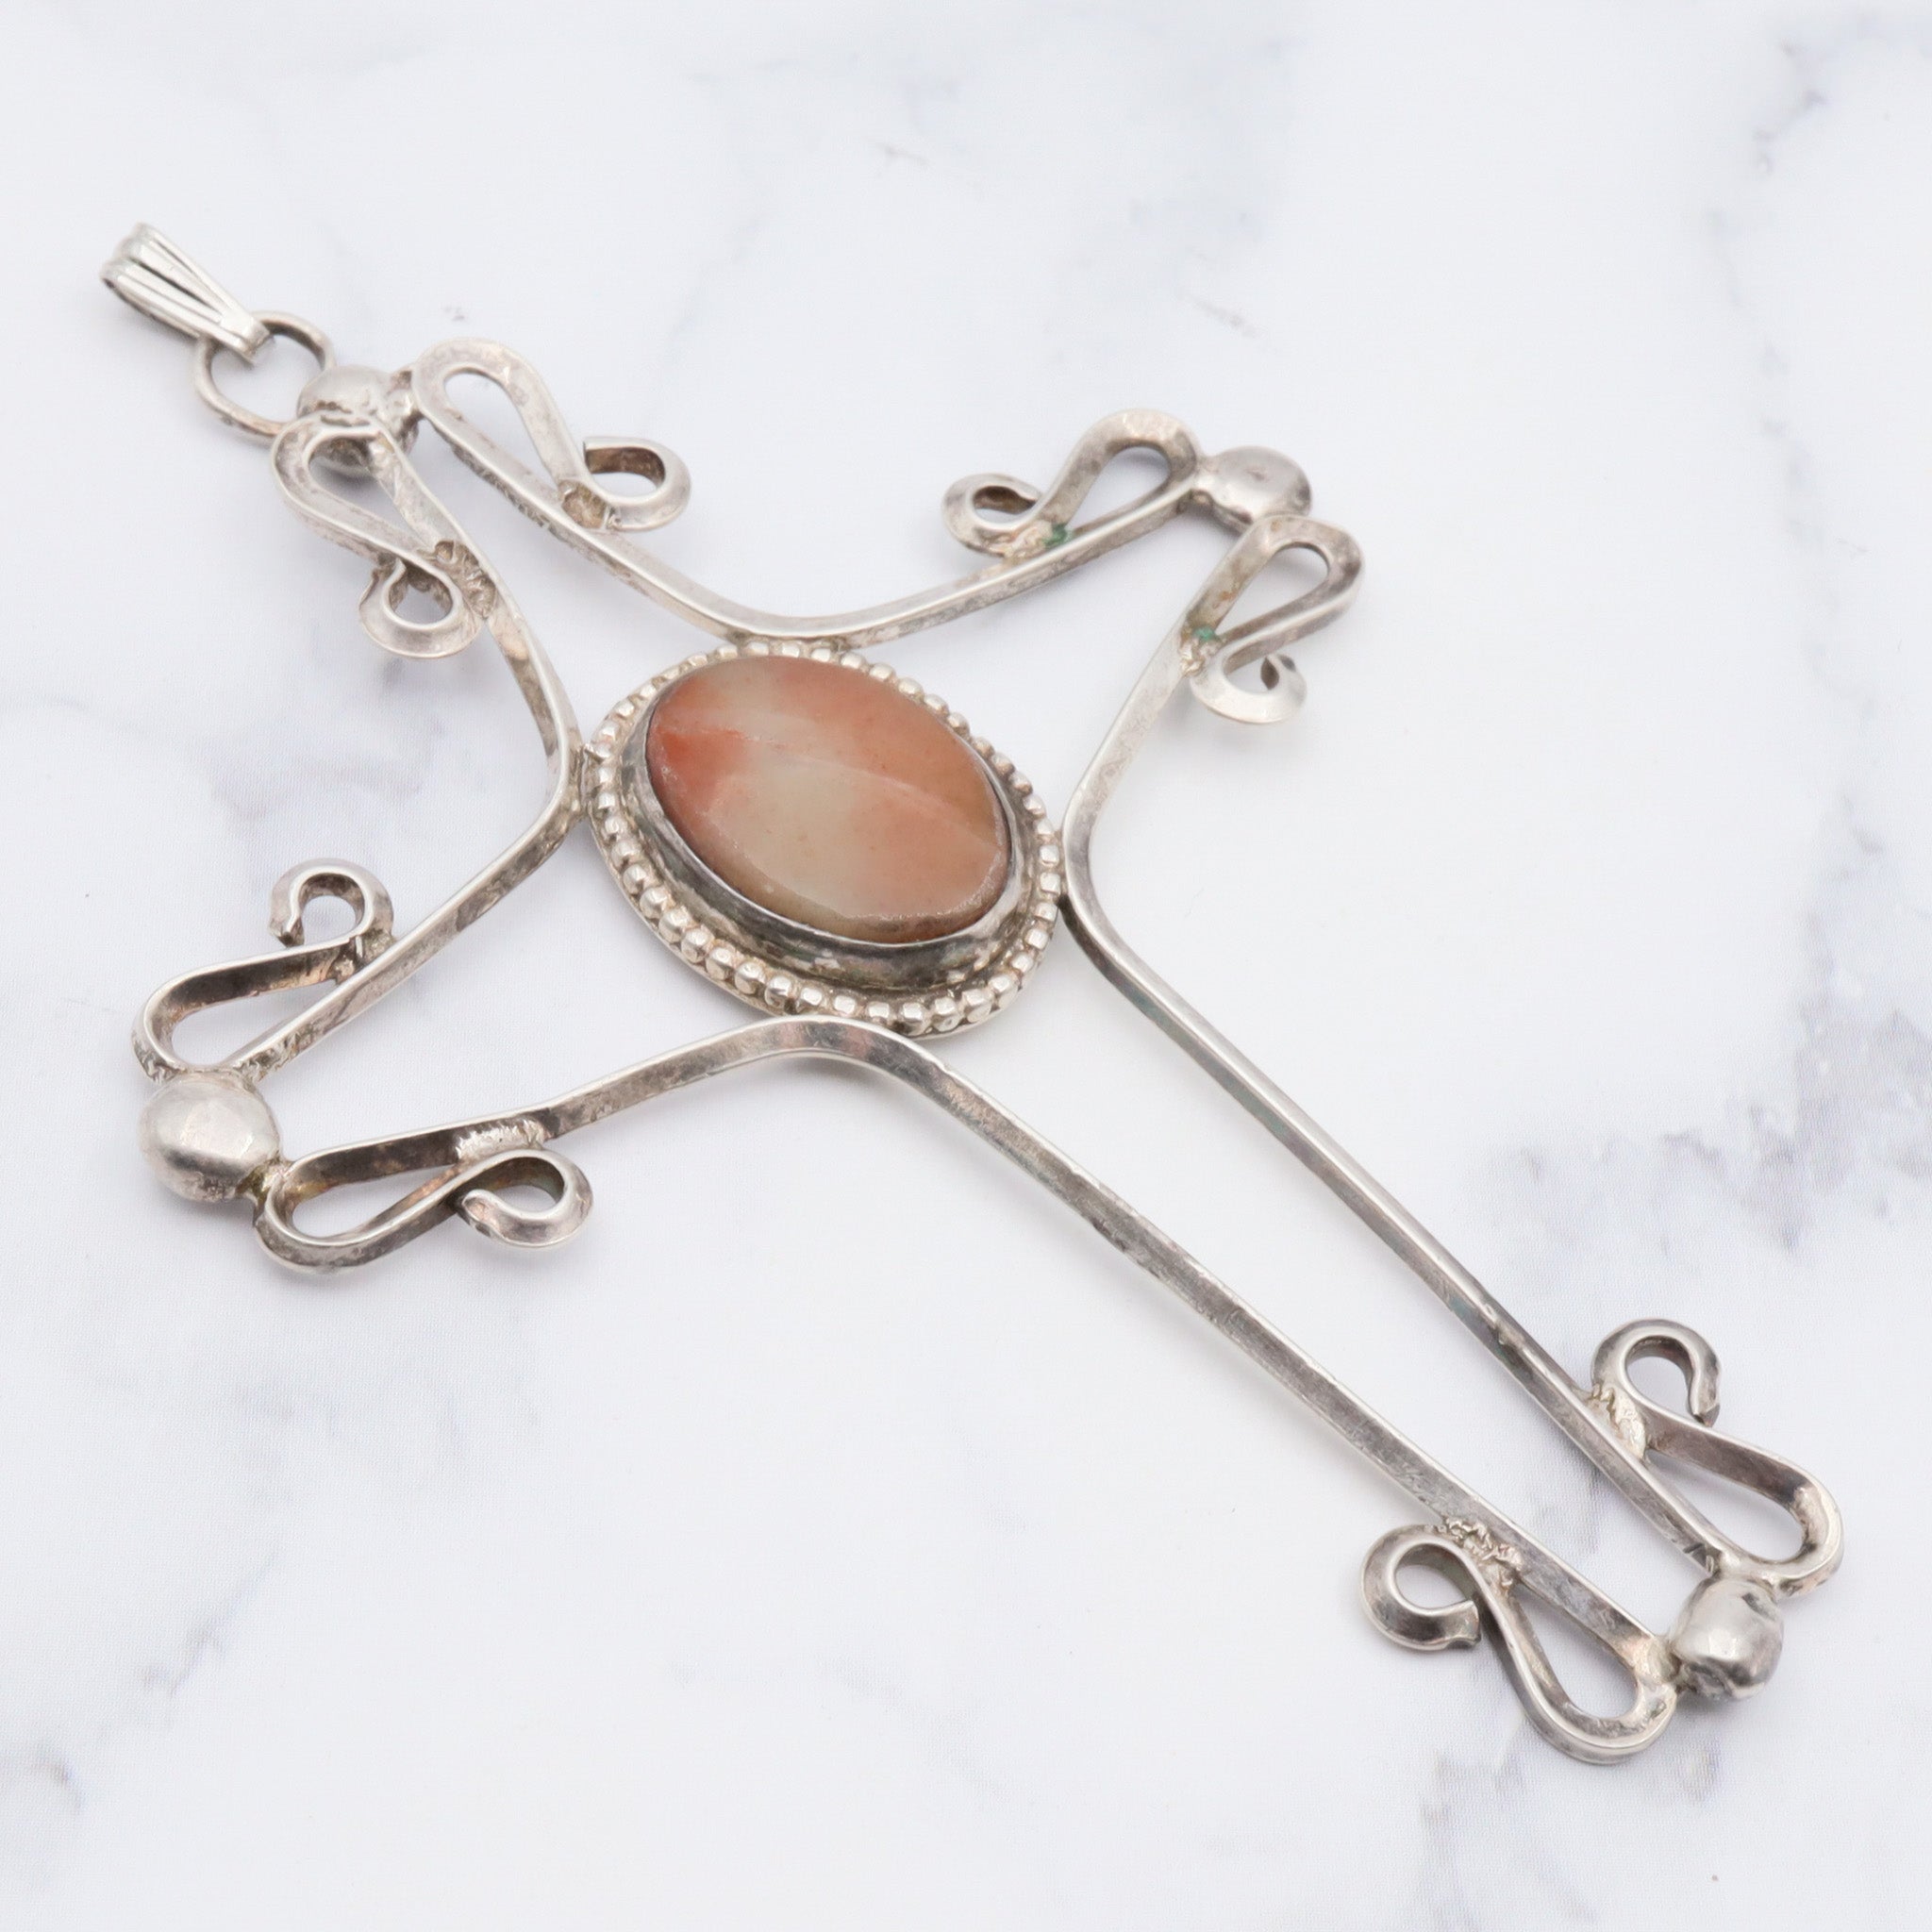 Antique handmade sterling silver & agate cross pendant